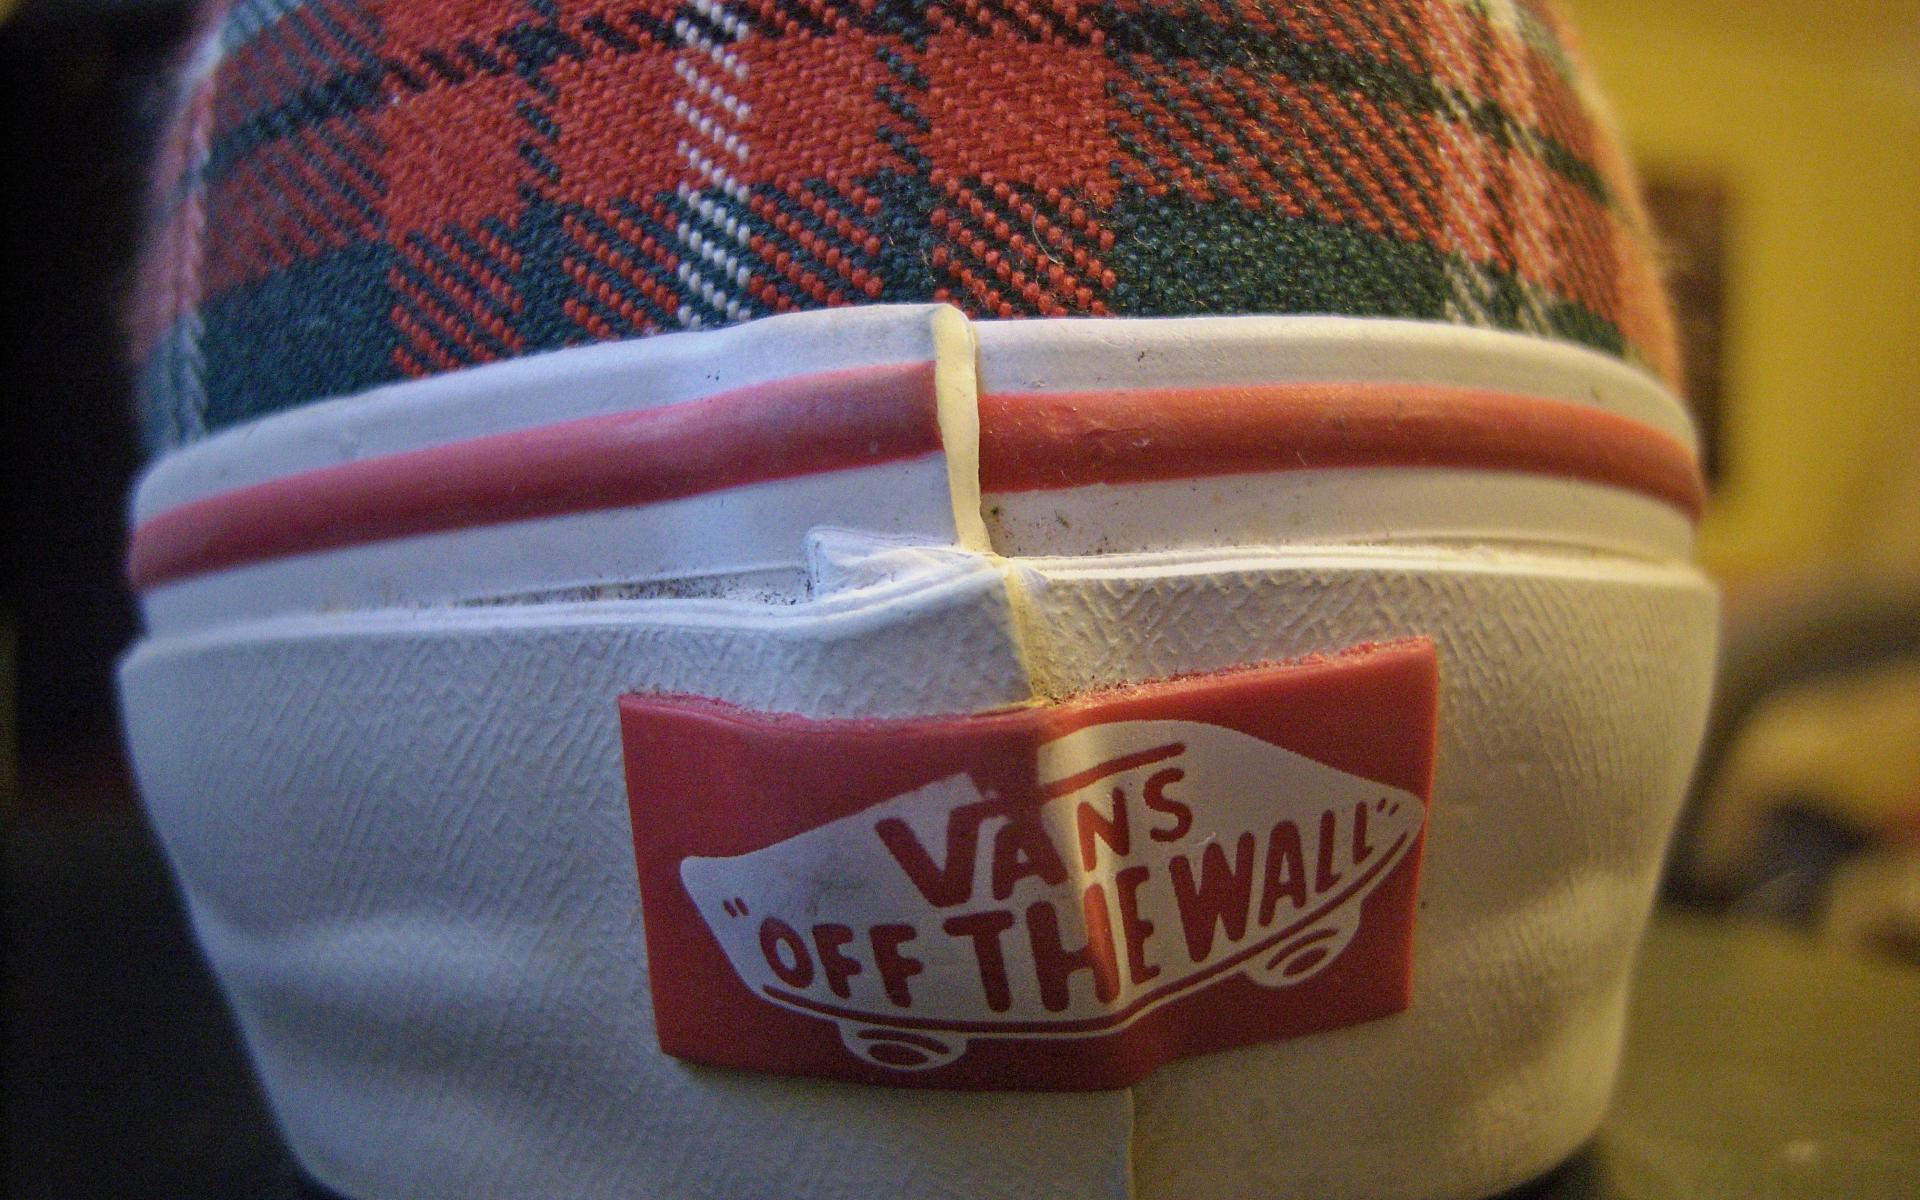 Off The Wall Shoes Vans Wallpaper HD